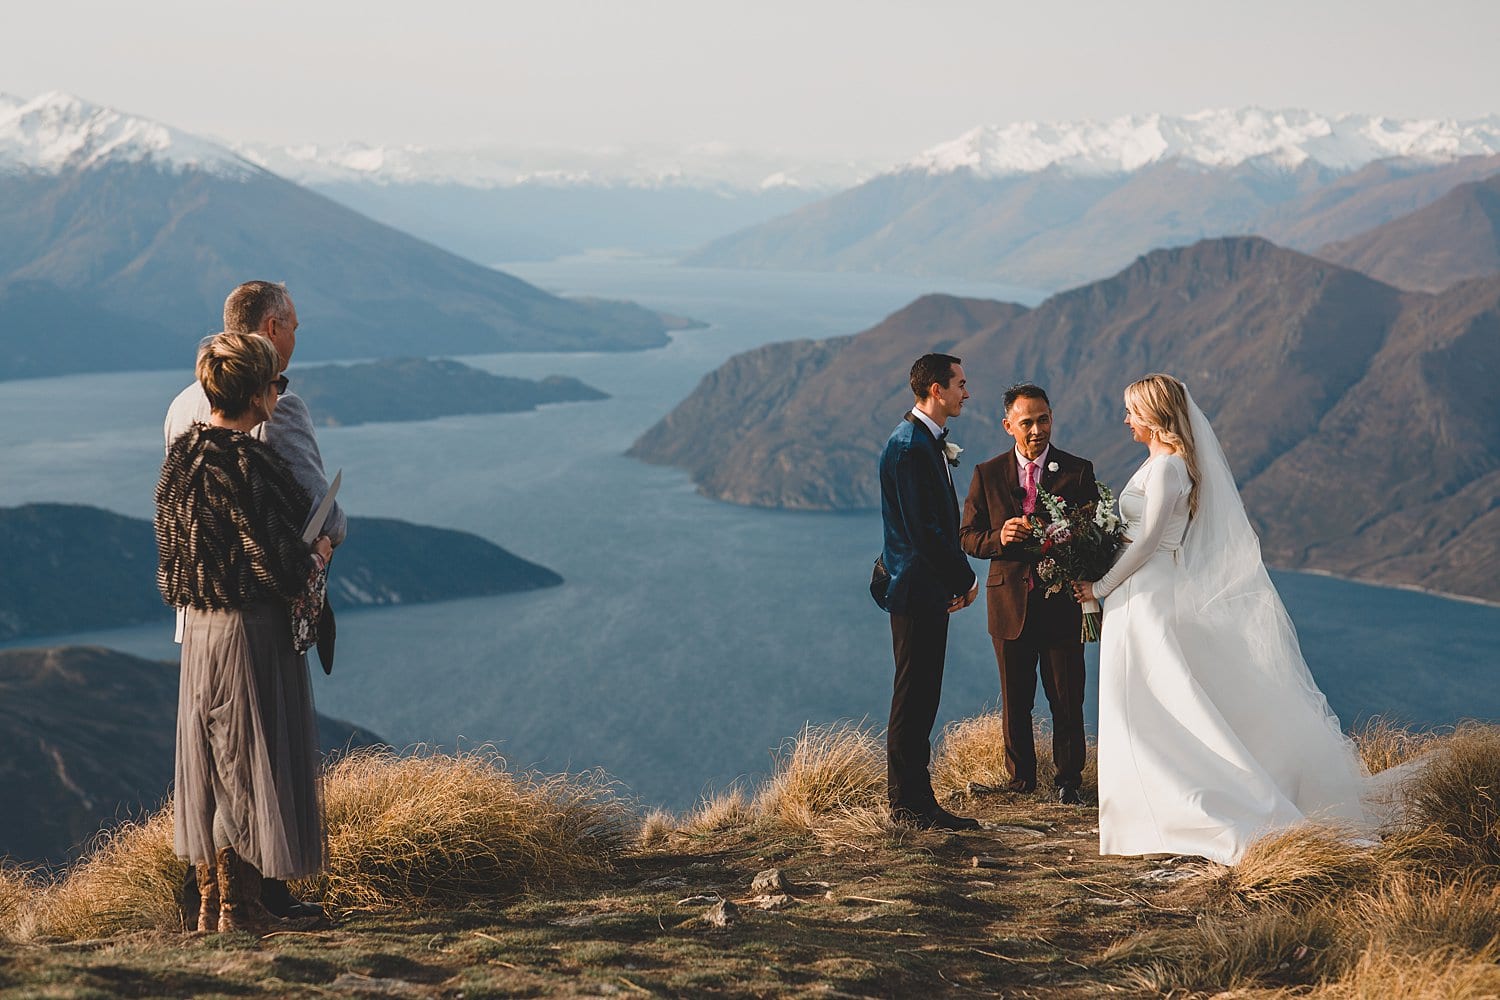 Coromandel Peak Mountain Wedding